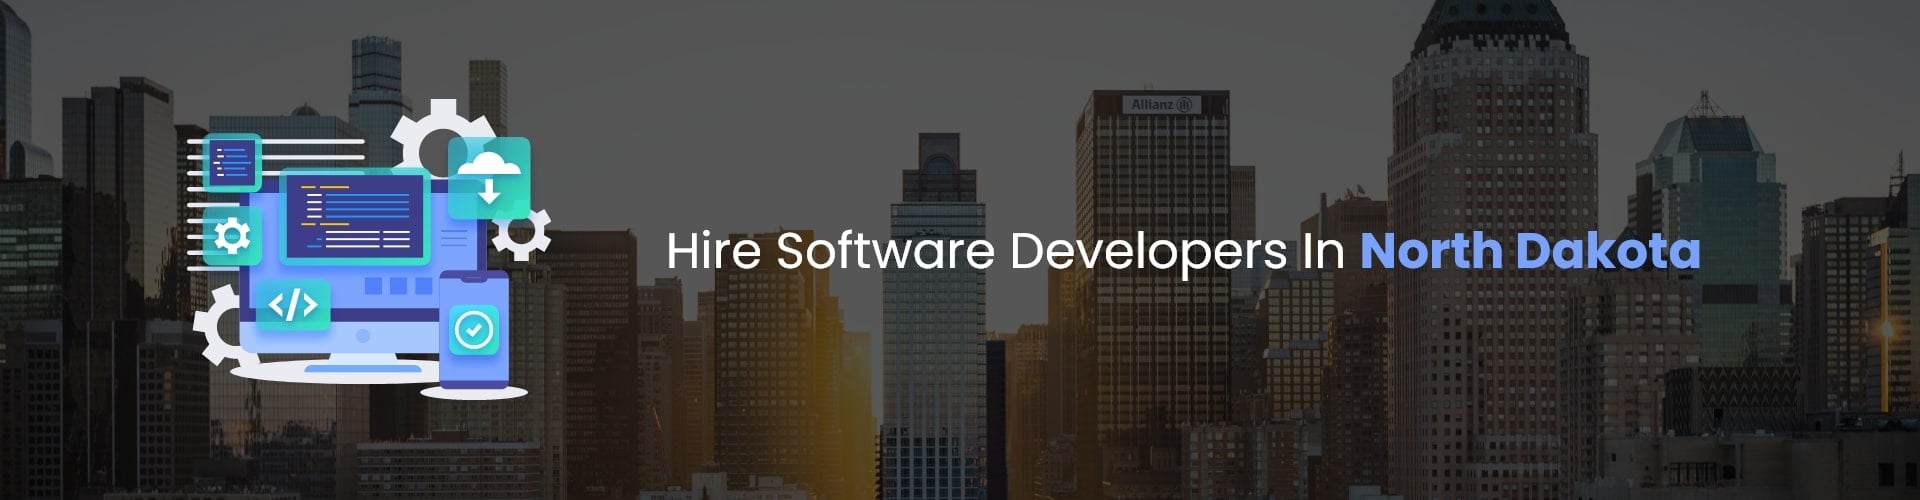 hire software developers in north dakota